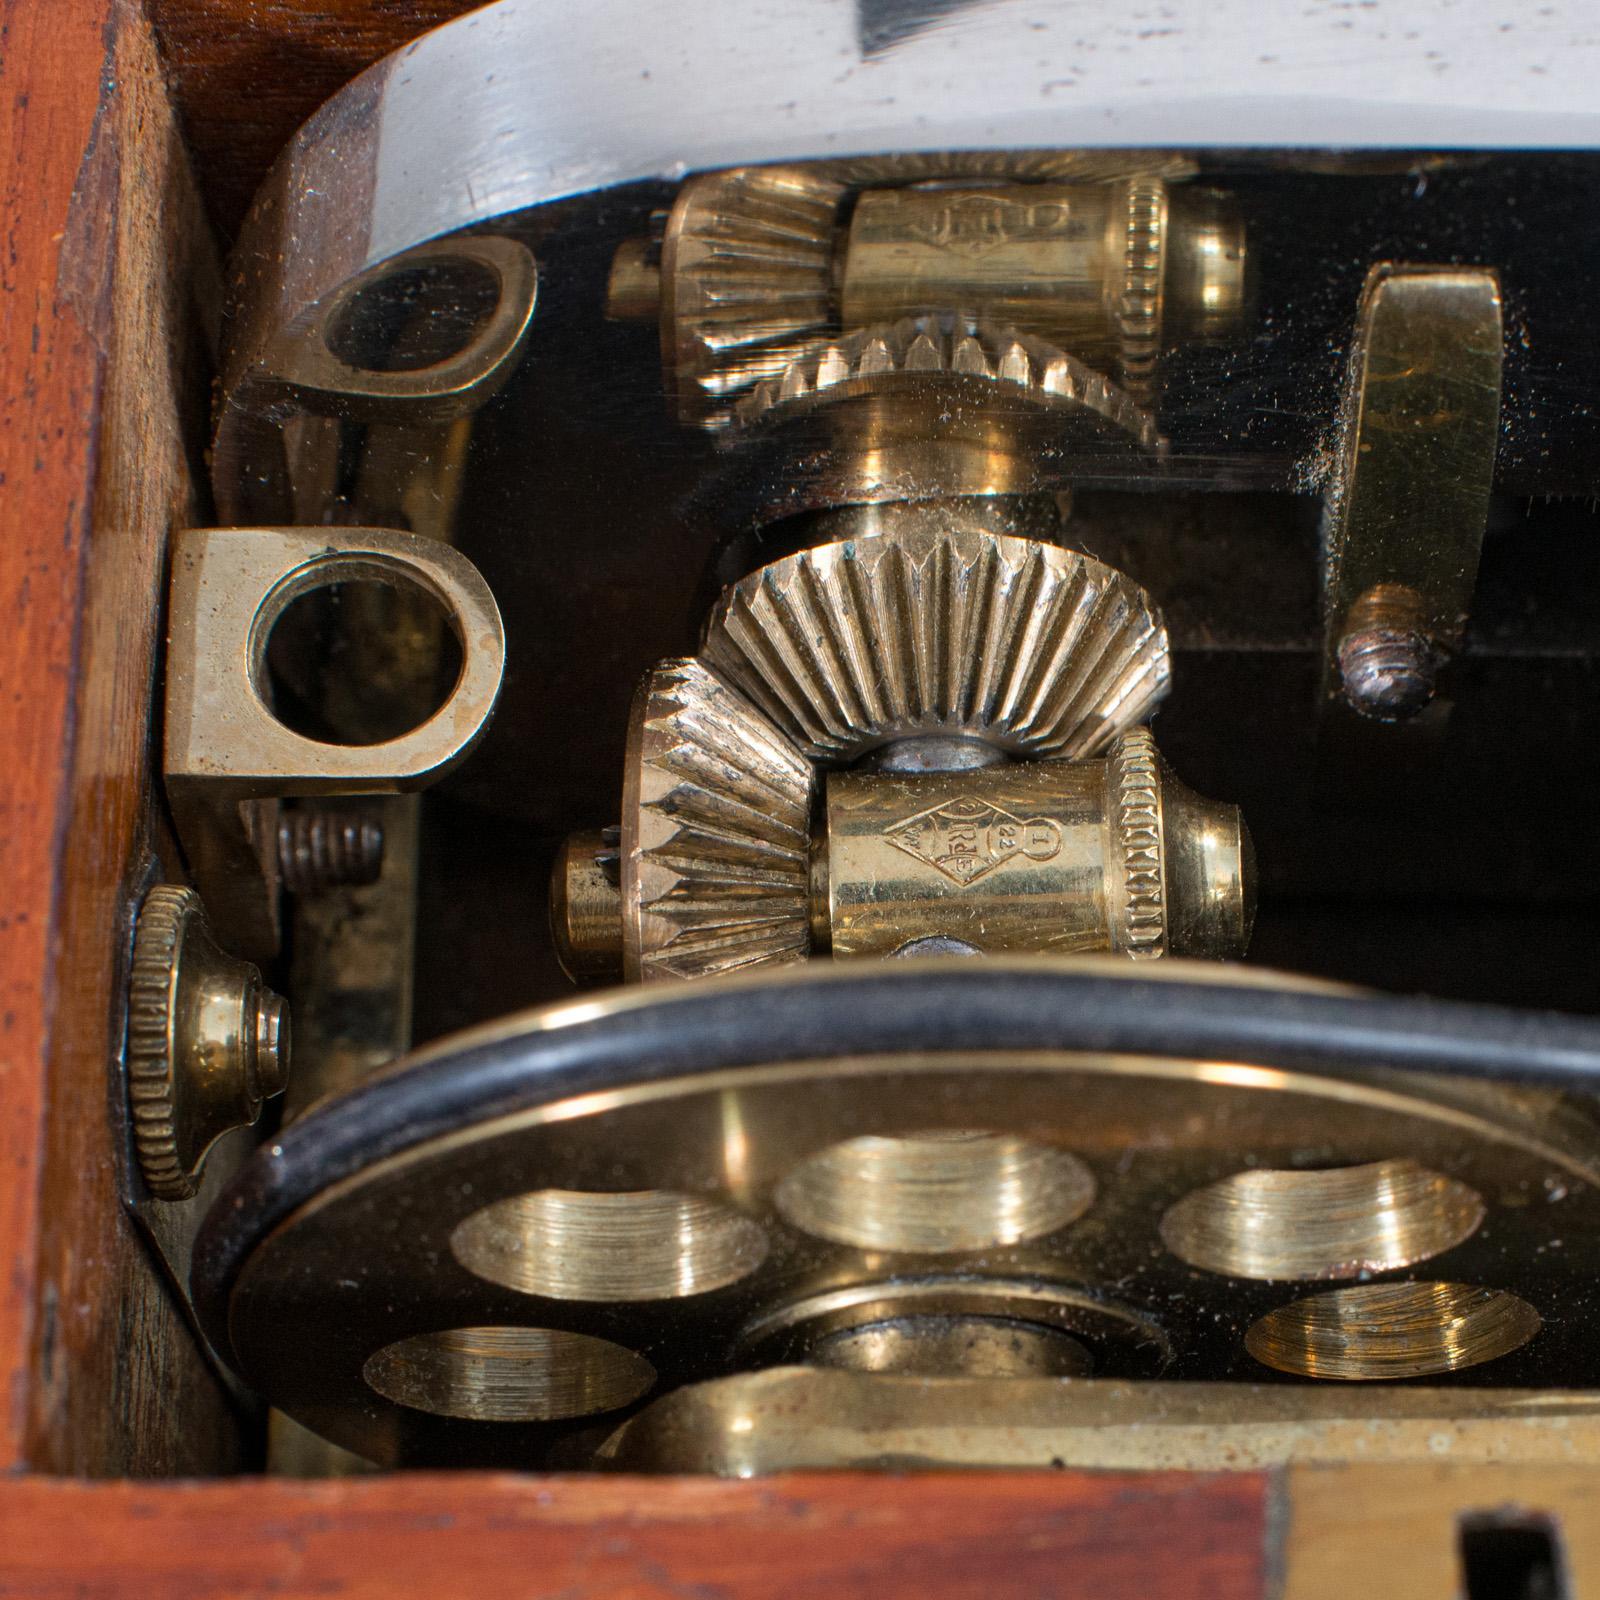 Mahogany Small Antique Electric Therapy Machine, English, Scientific, Medical, Victorian